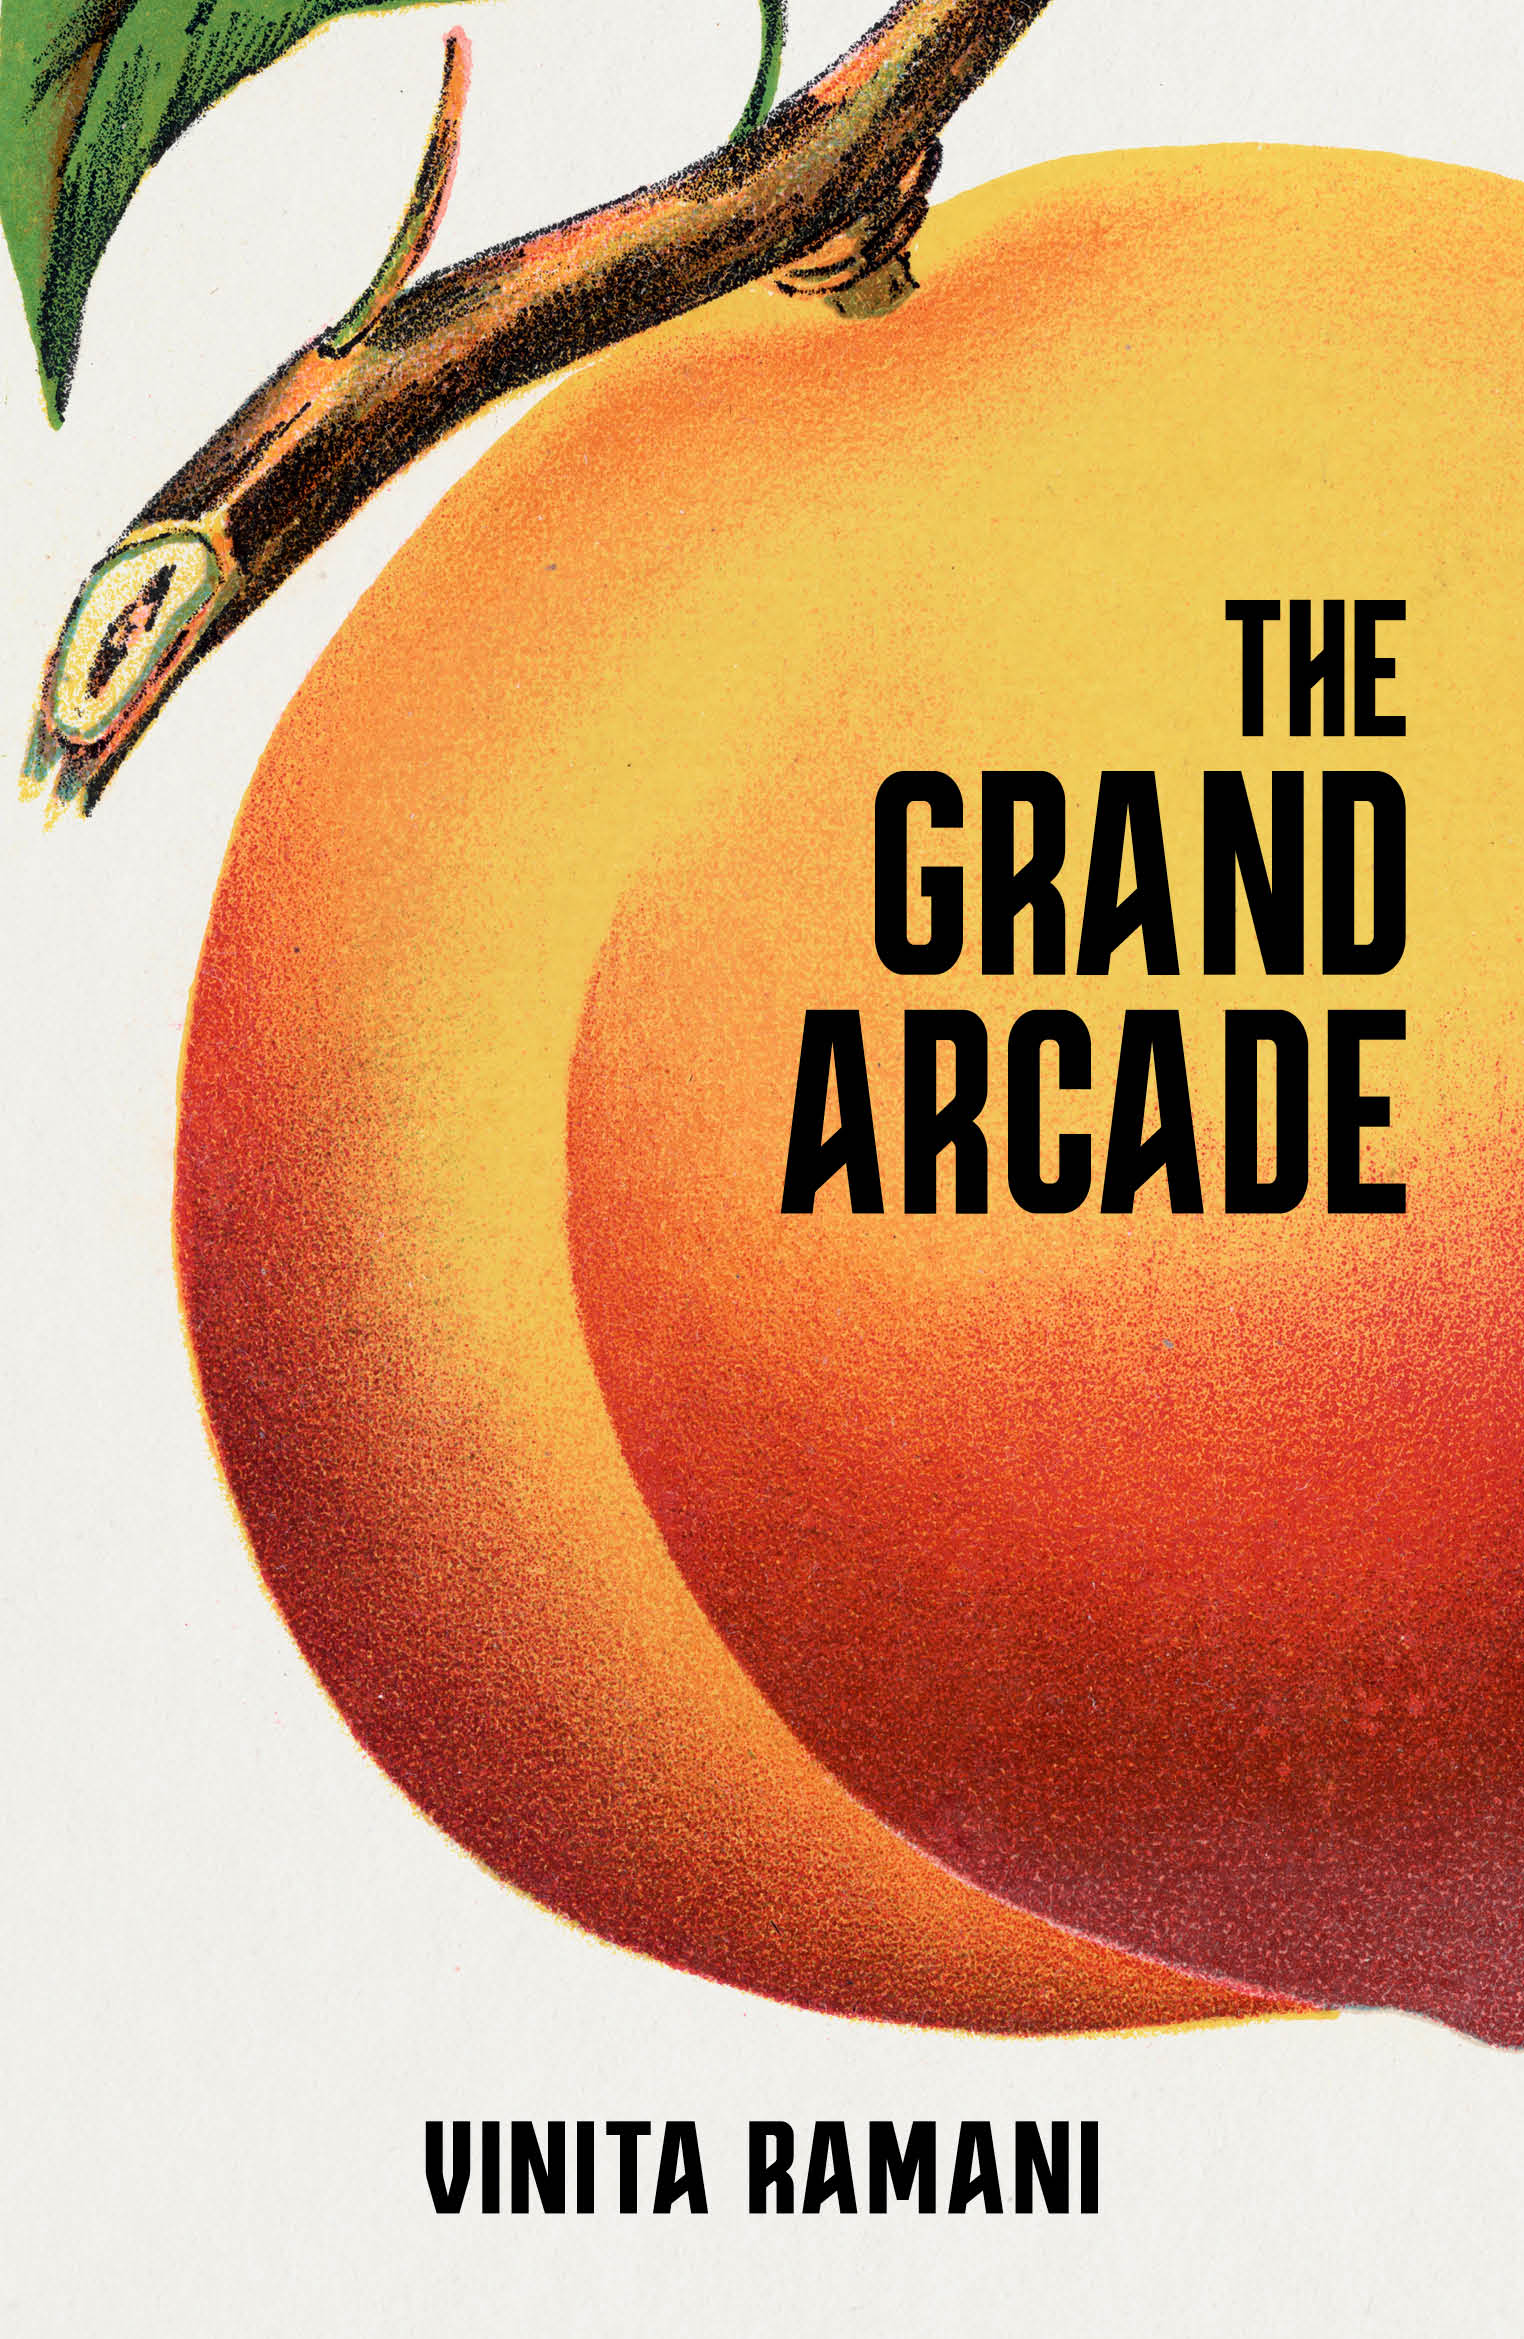 The Grand Arcade